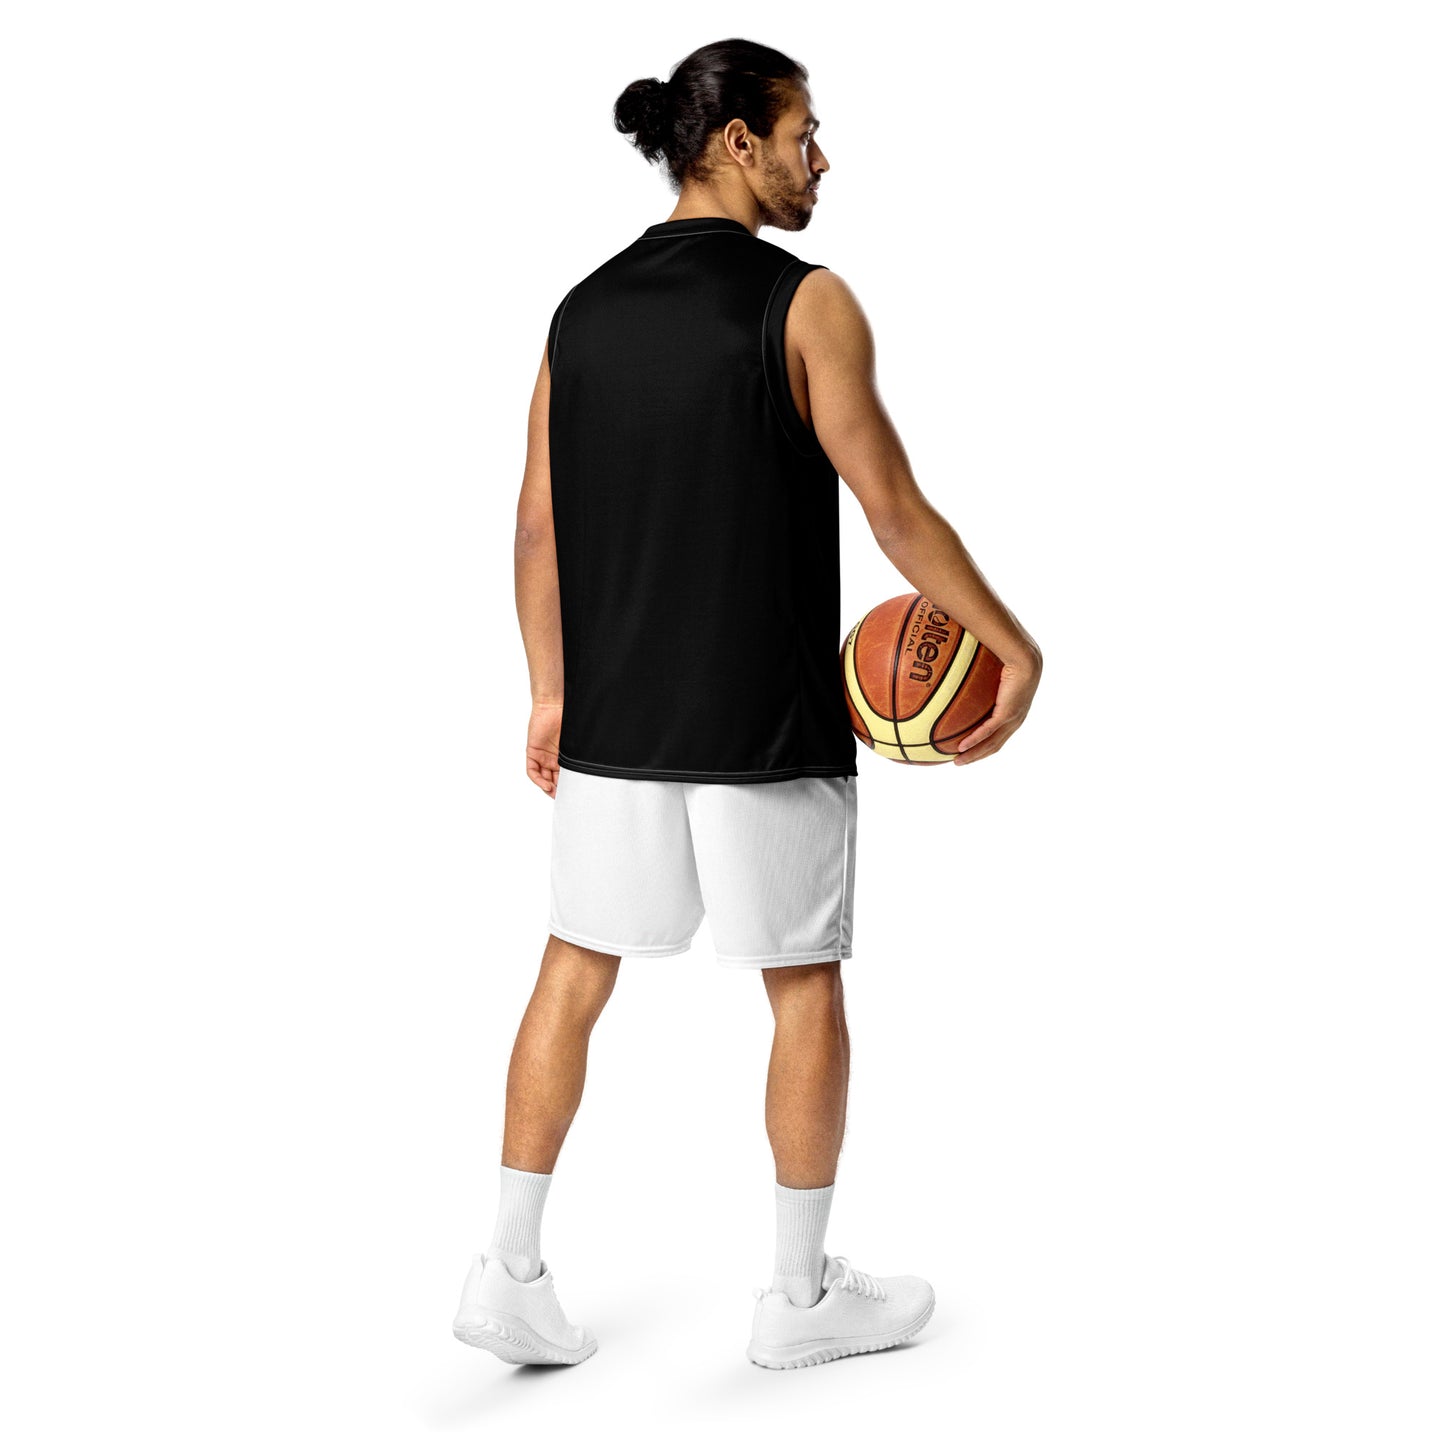 Amir LaVie - basketball jersey